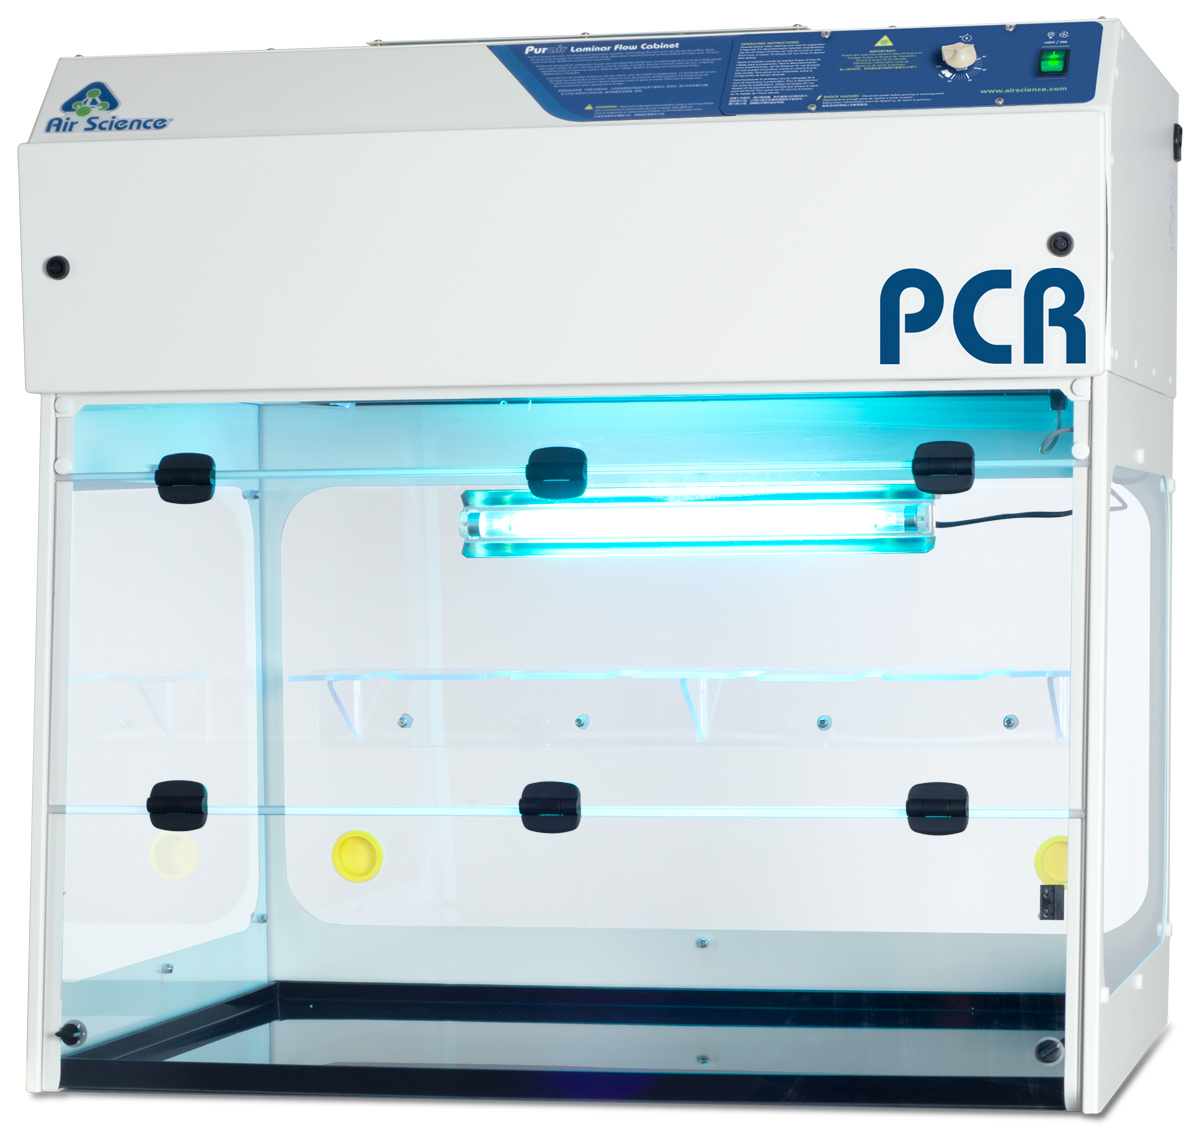 PCR Amplification